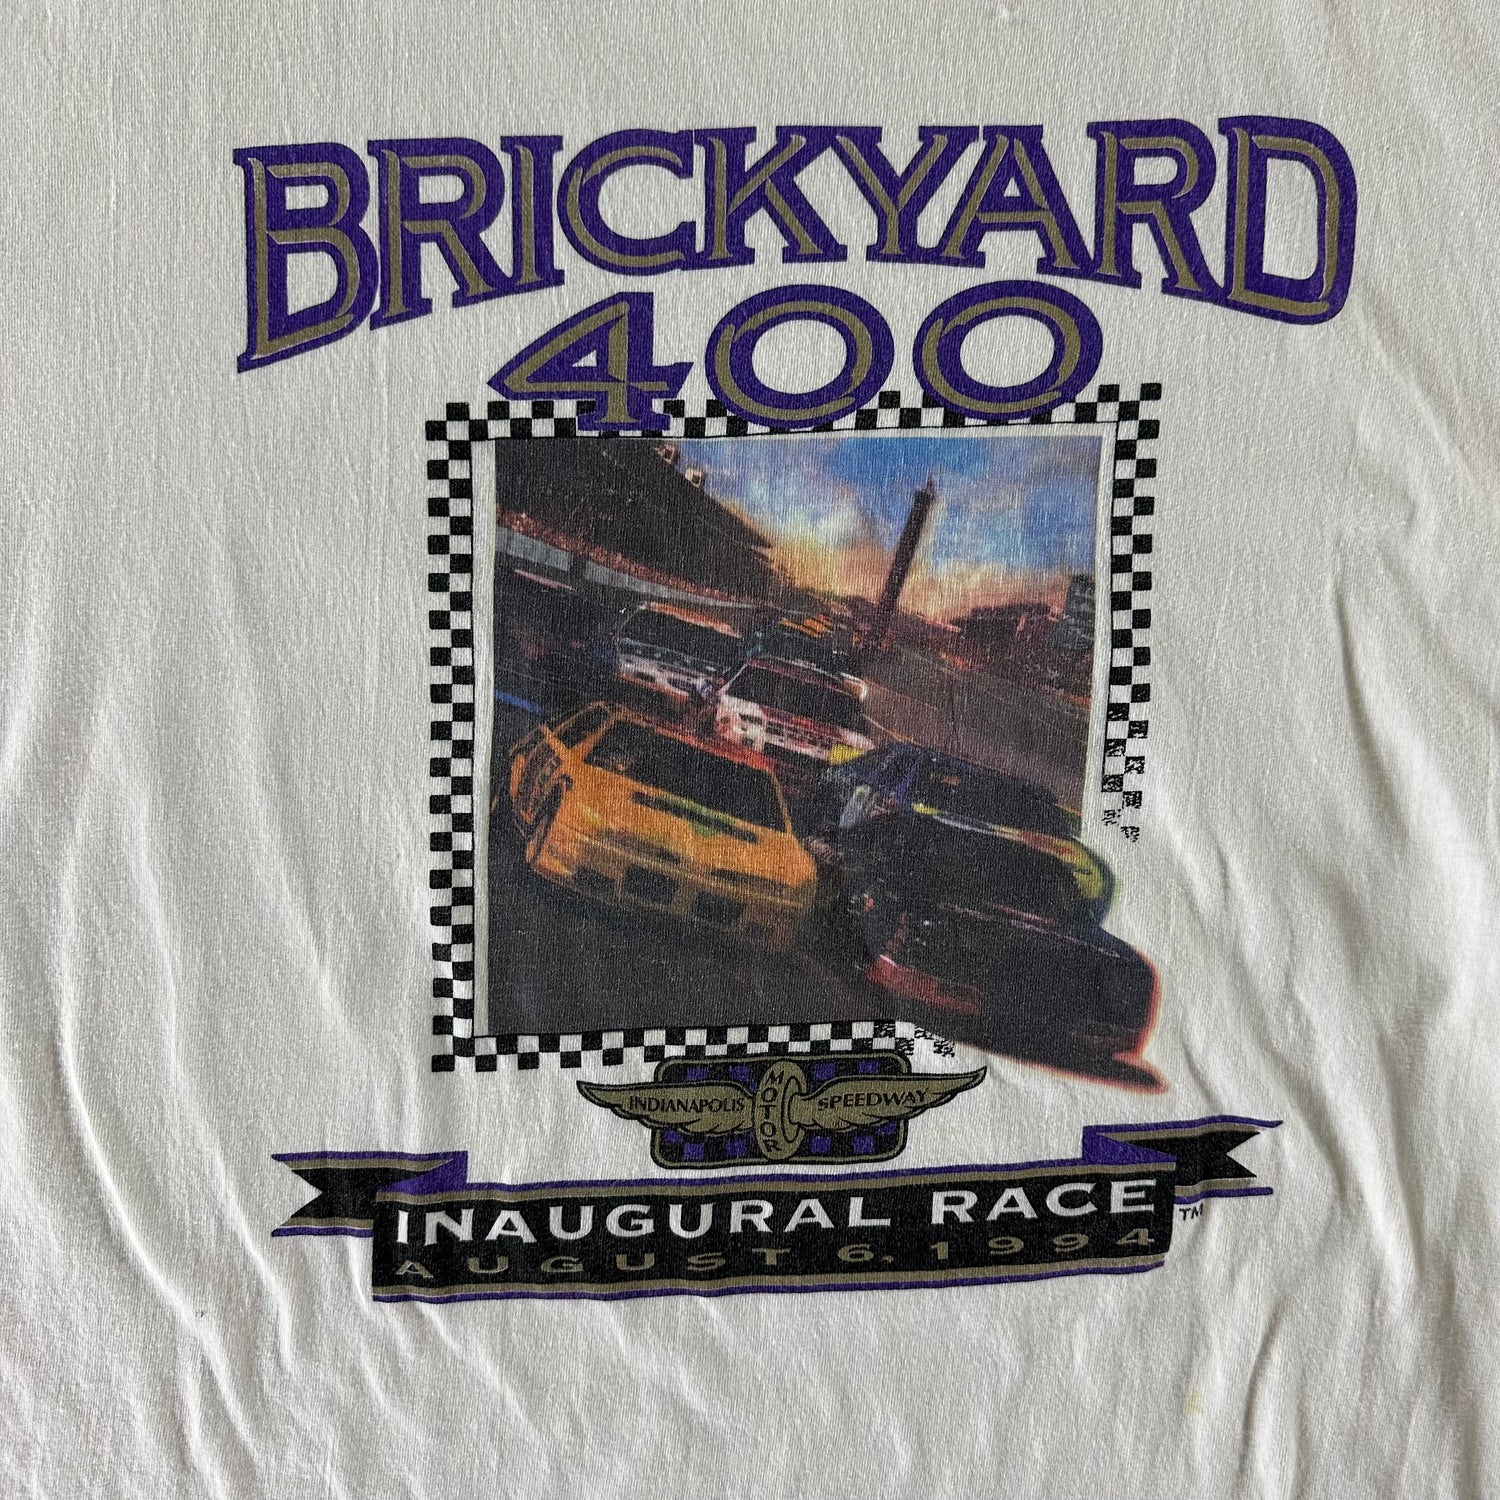 Vintage 1994 Brickyard 400 T-shirt size XL